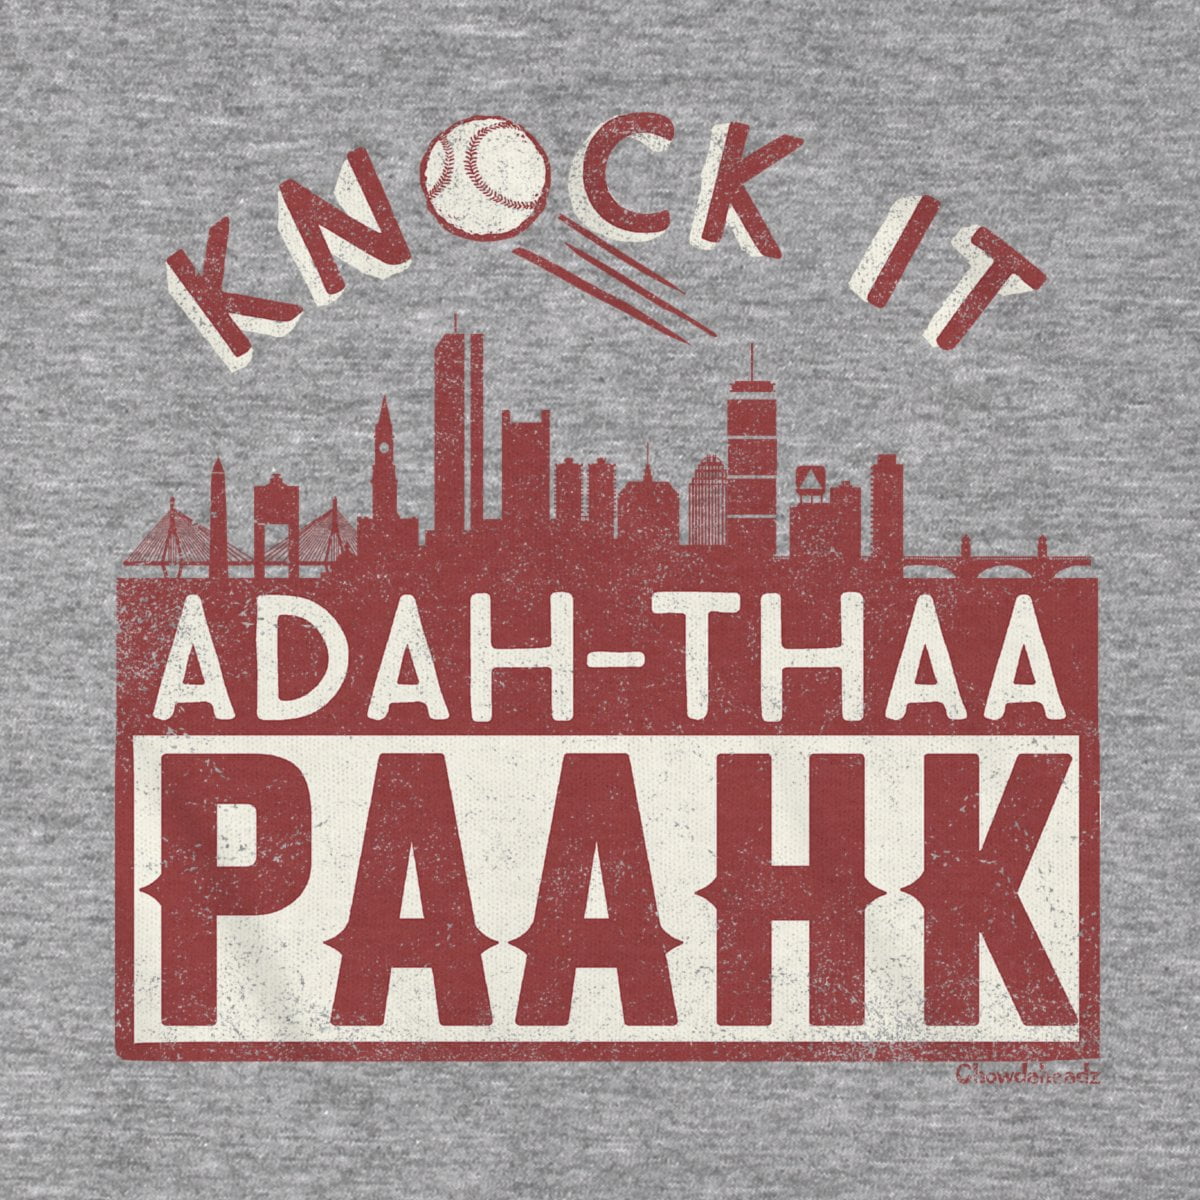 Knock it ADAH-THAA-PAAHK T-shirt - Chowdaheadz